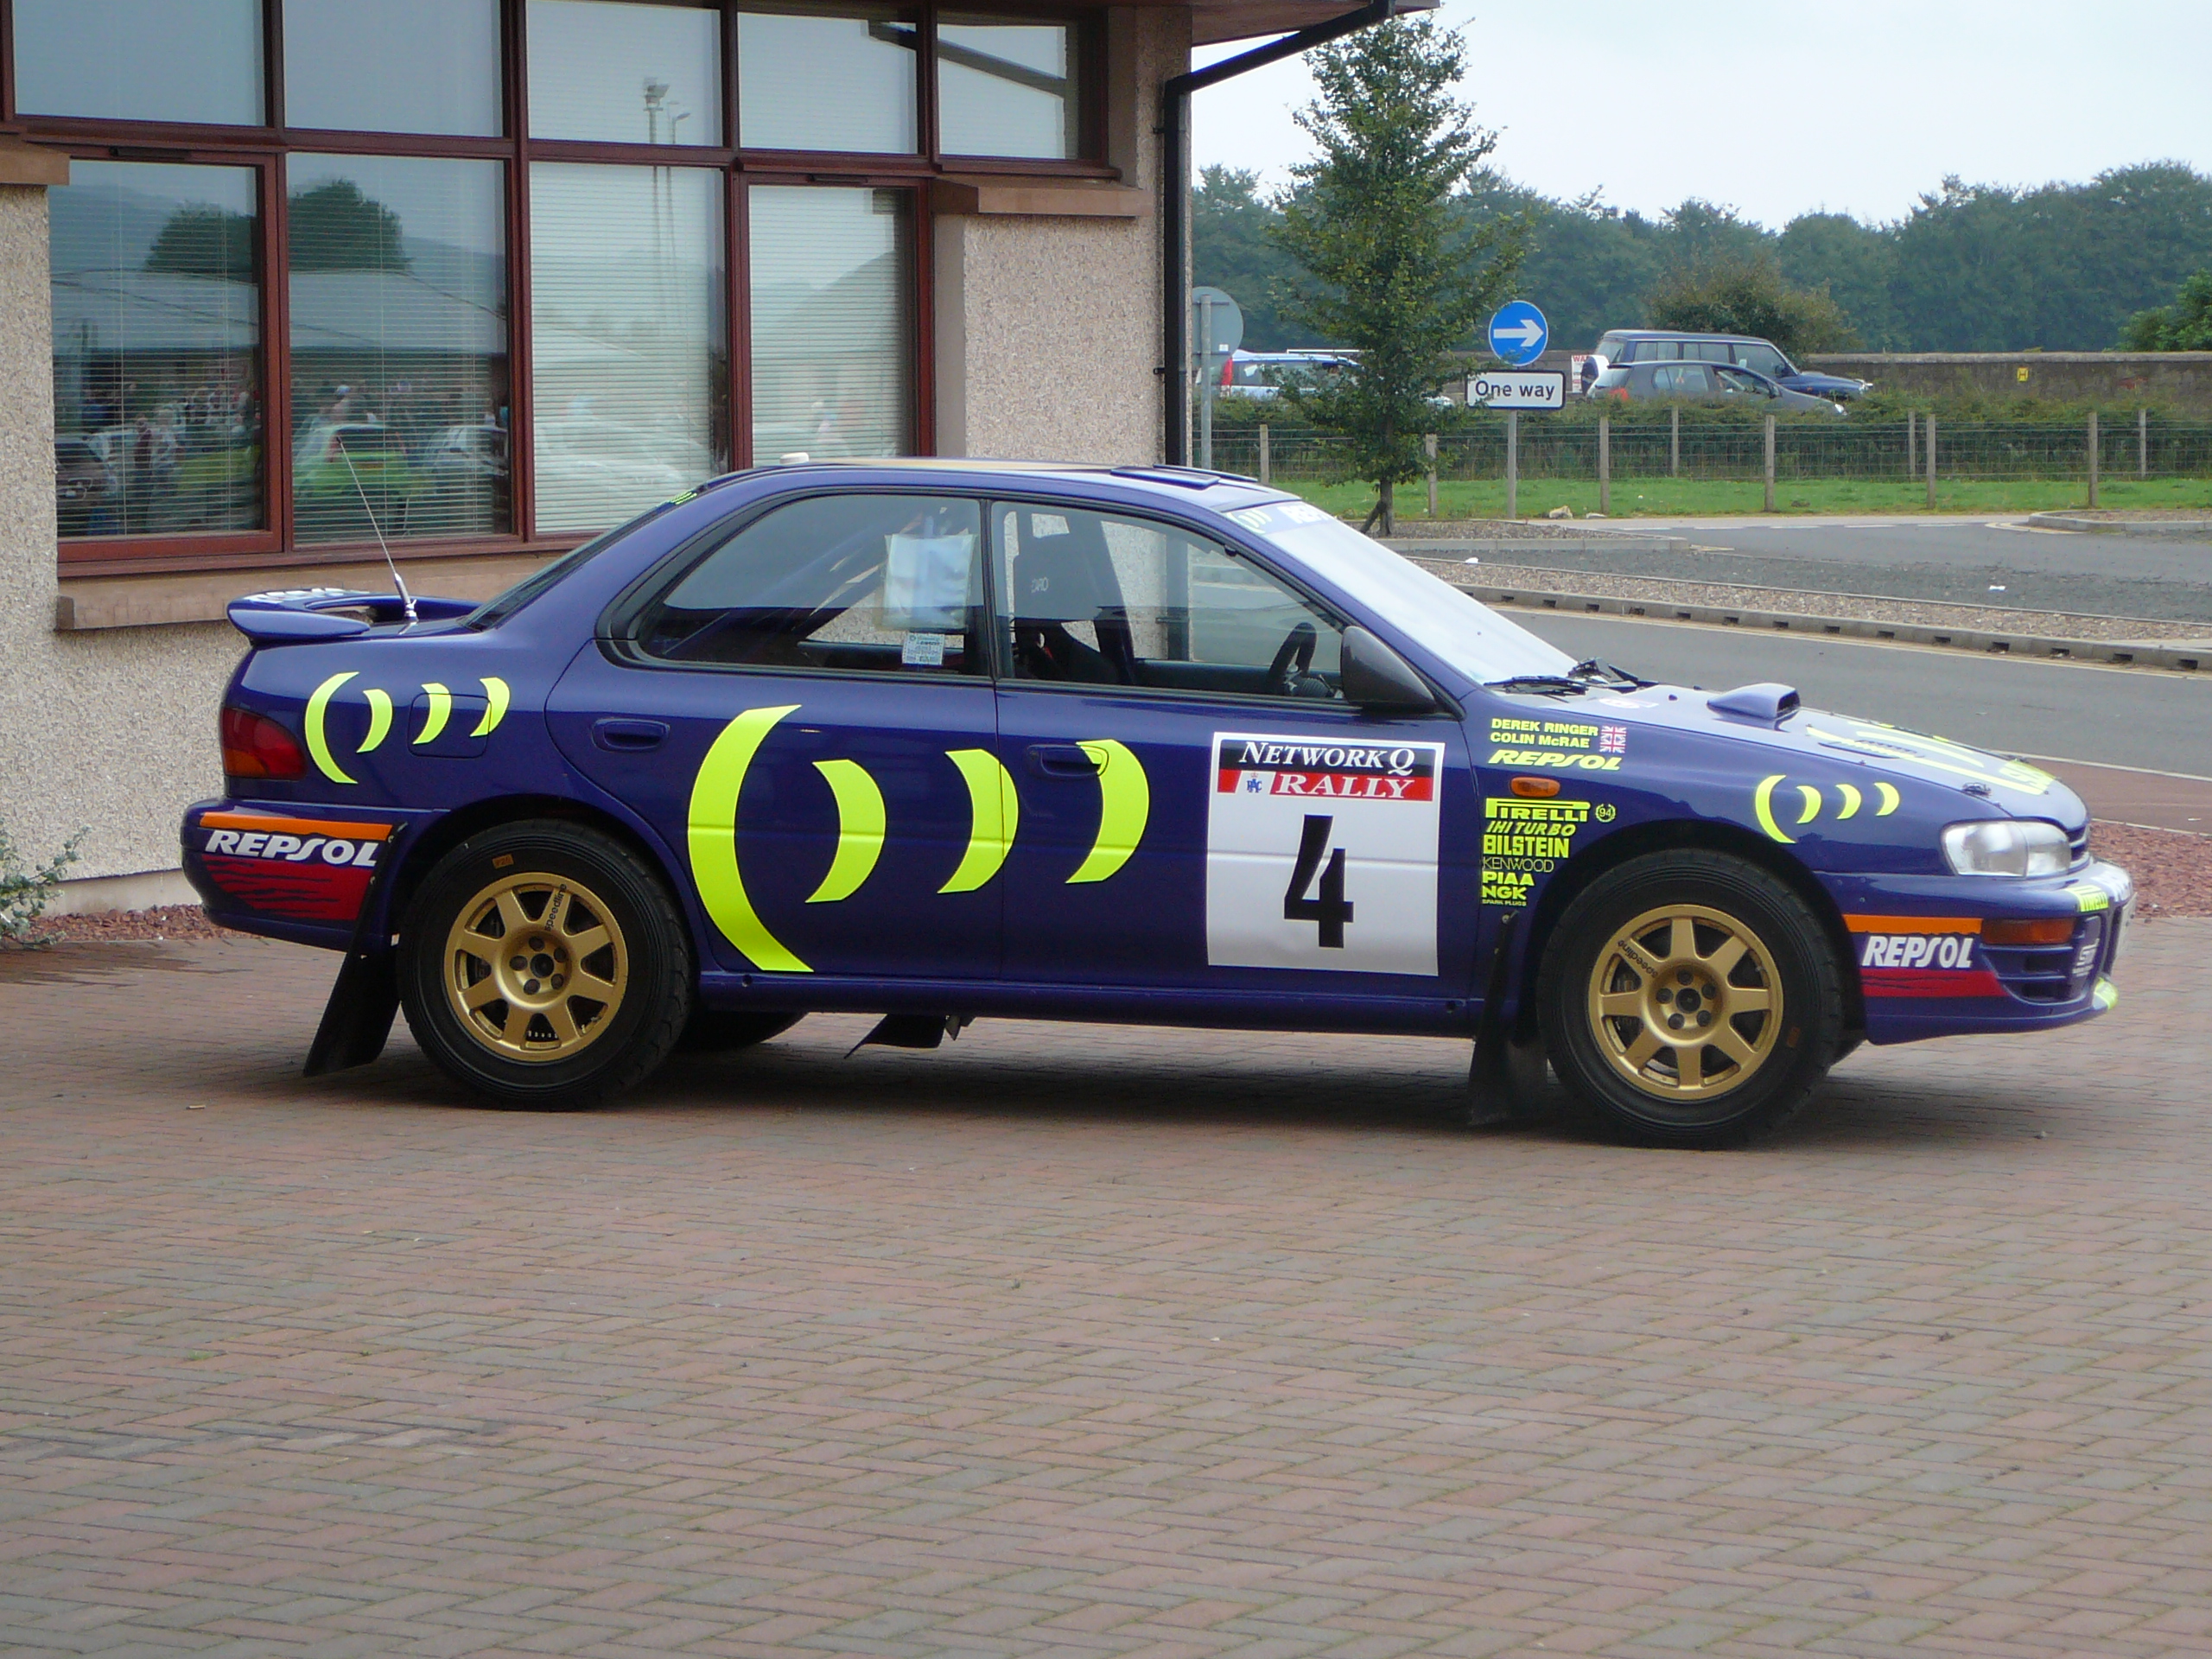 Flickr - bjmullan - Colin McRae's 1995 World Championship winning Subaru Impreza (3)